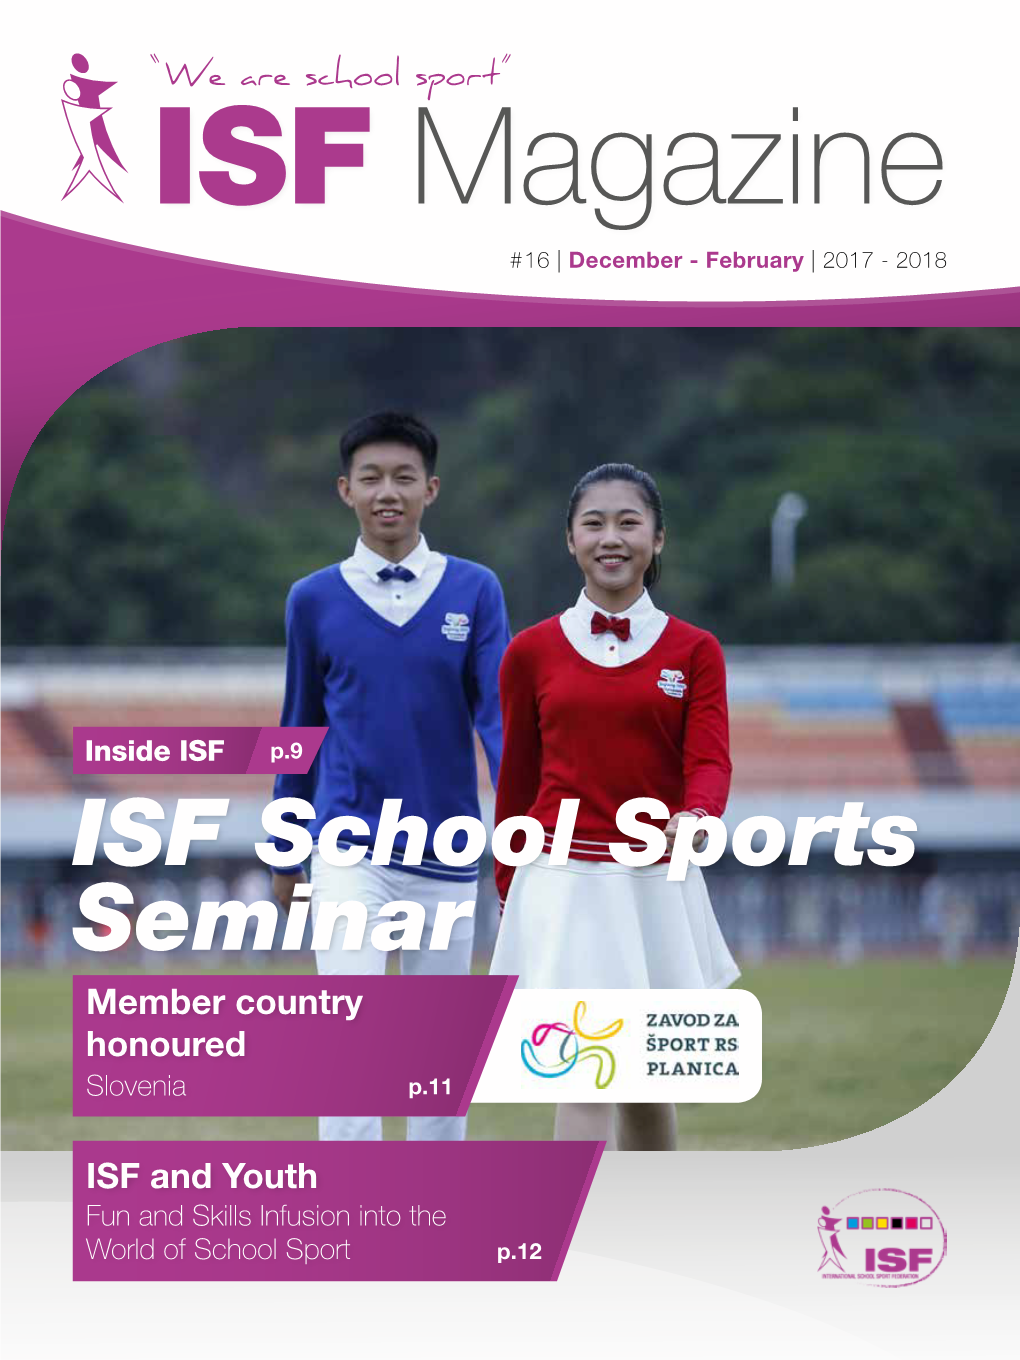 ISF School Sports Seminar Member Country Honoured Slovenia P.11